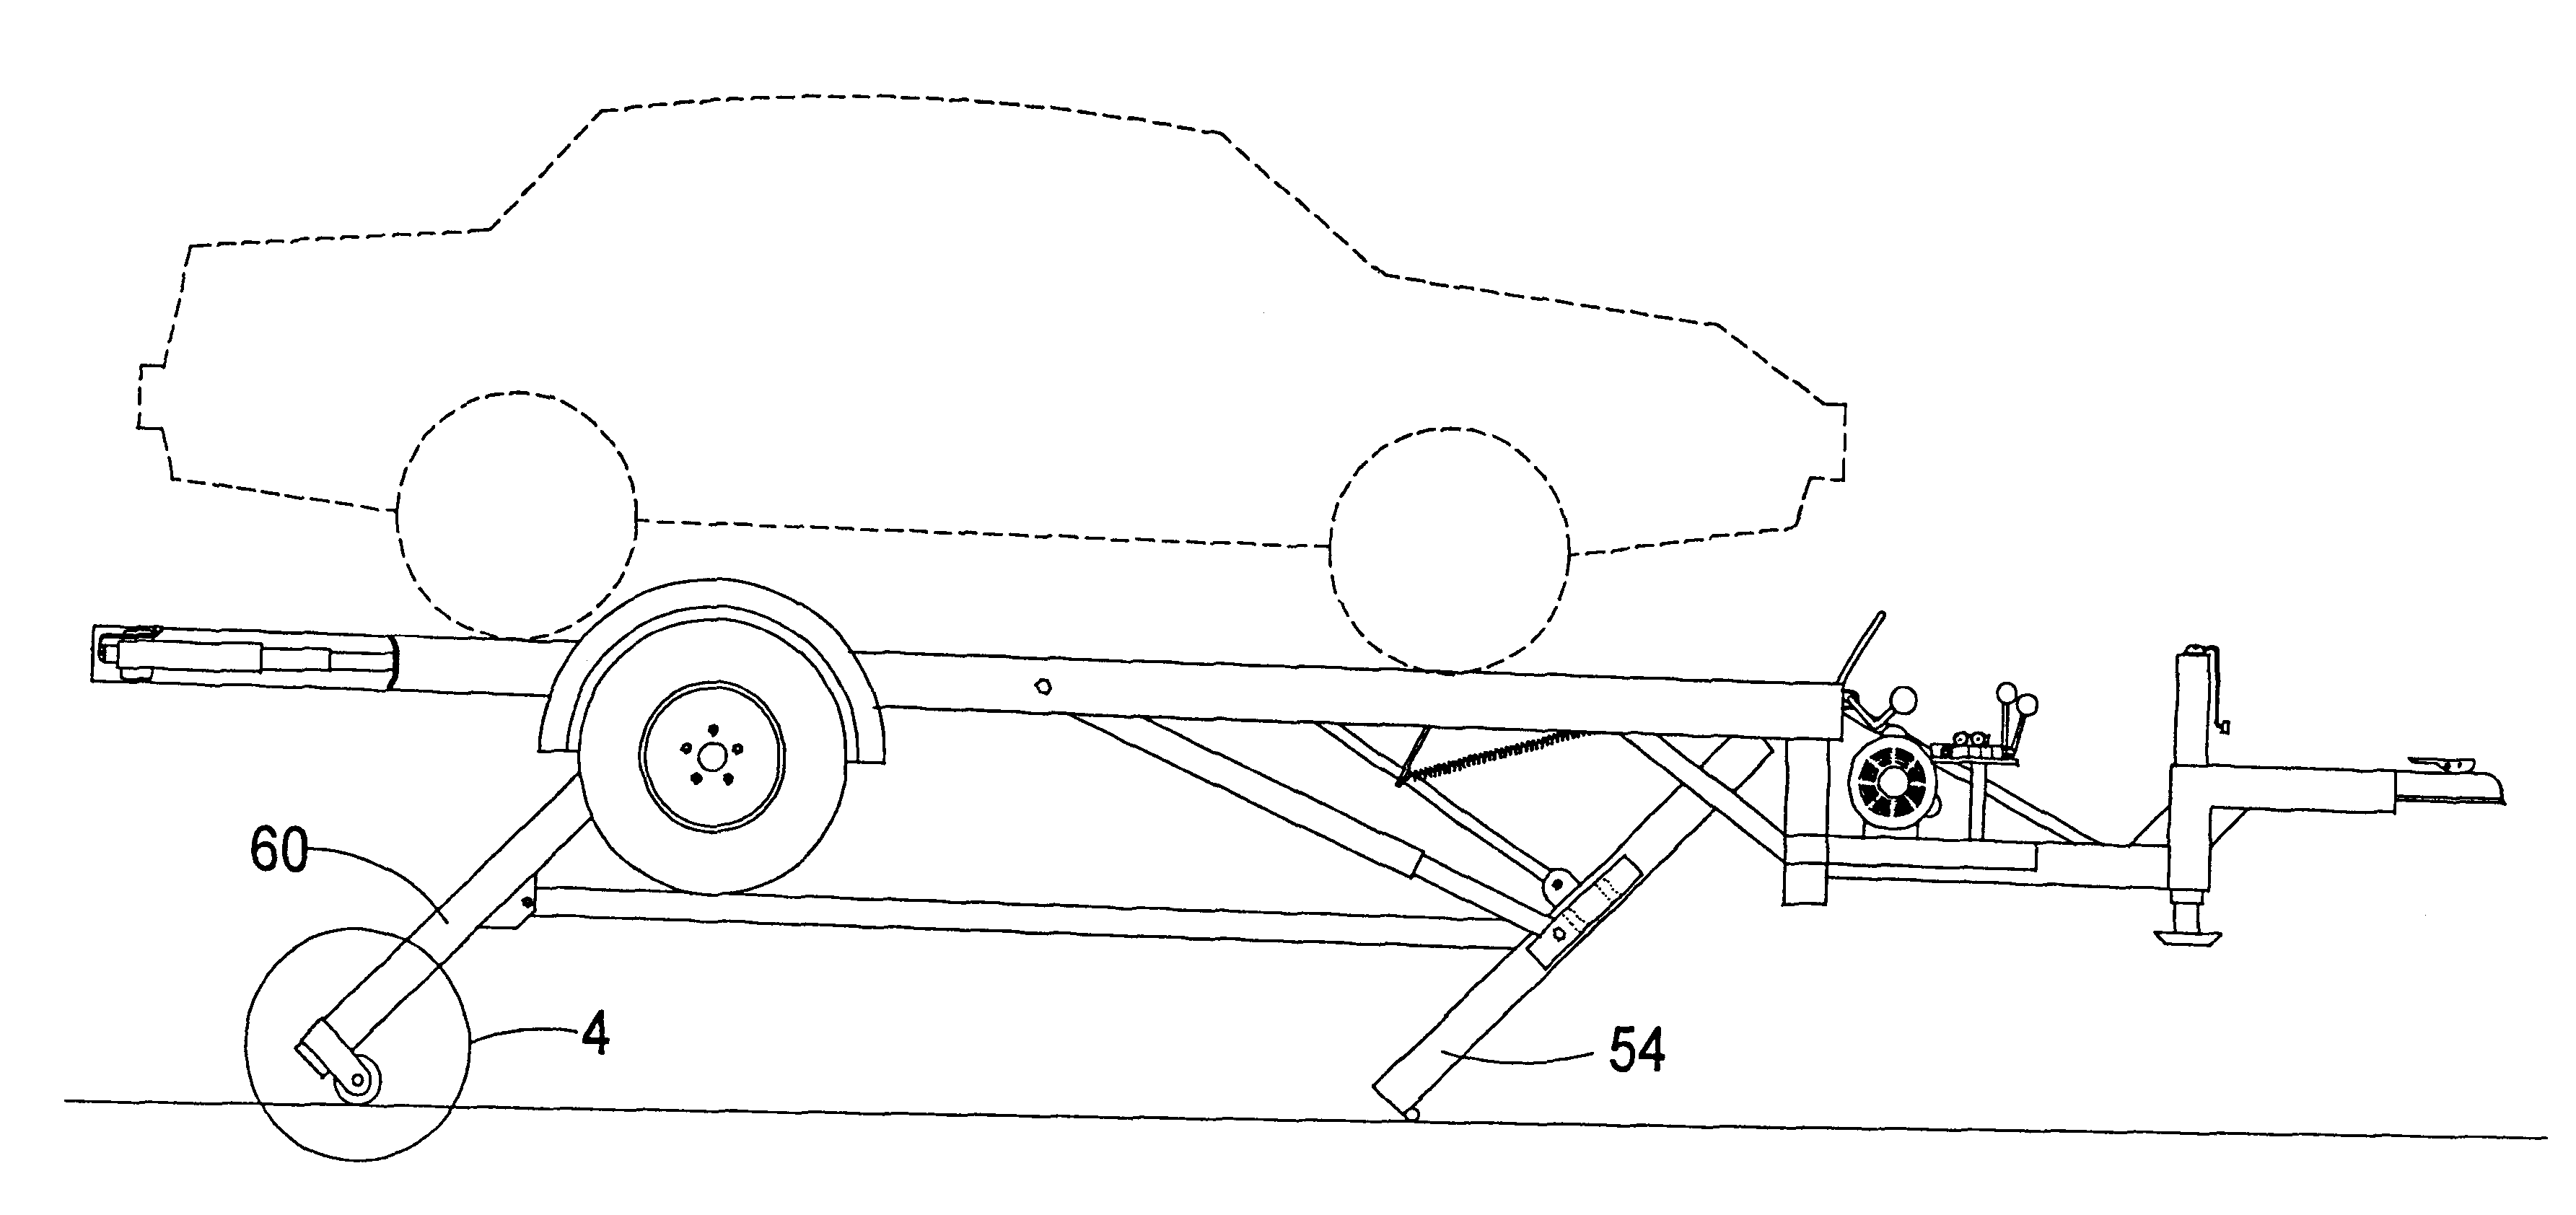 Portable hydraulic vehicle lift